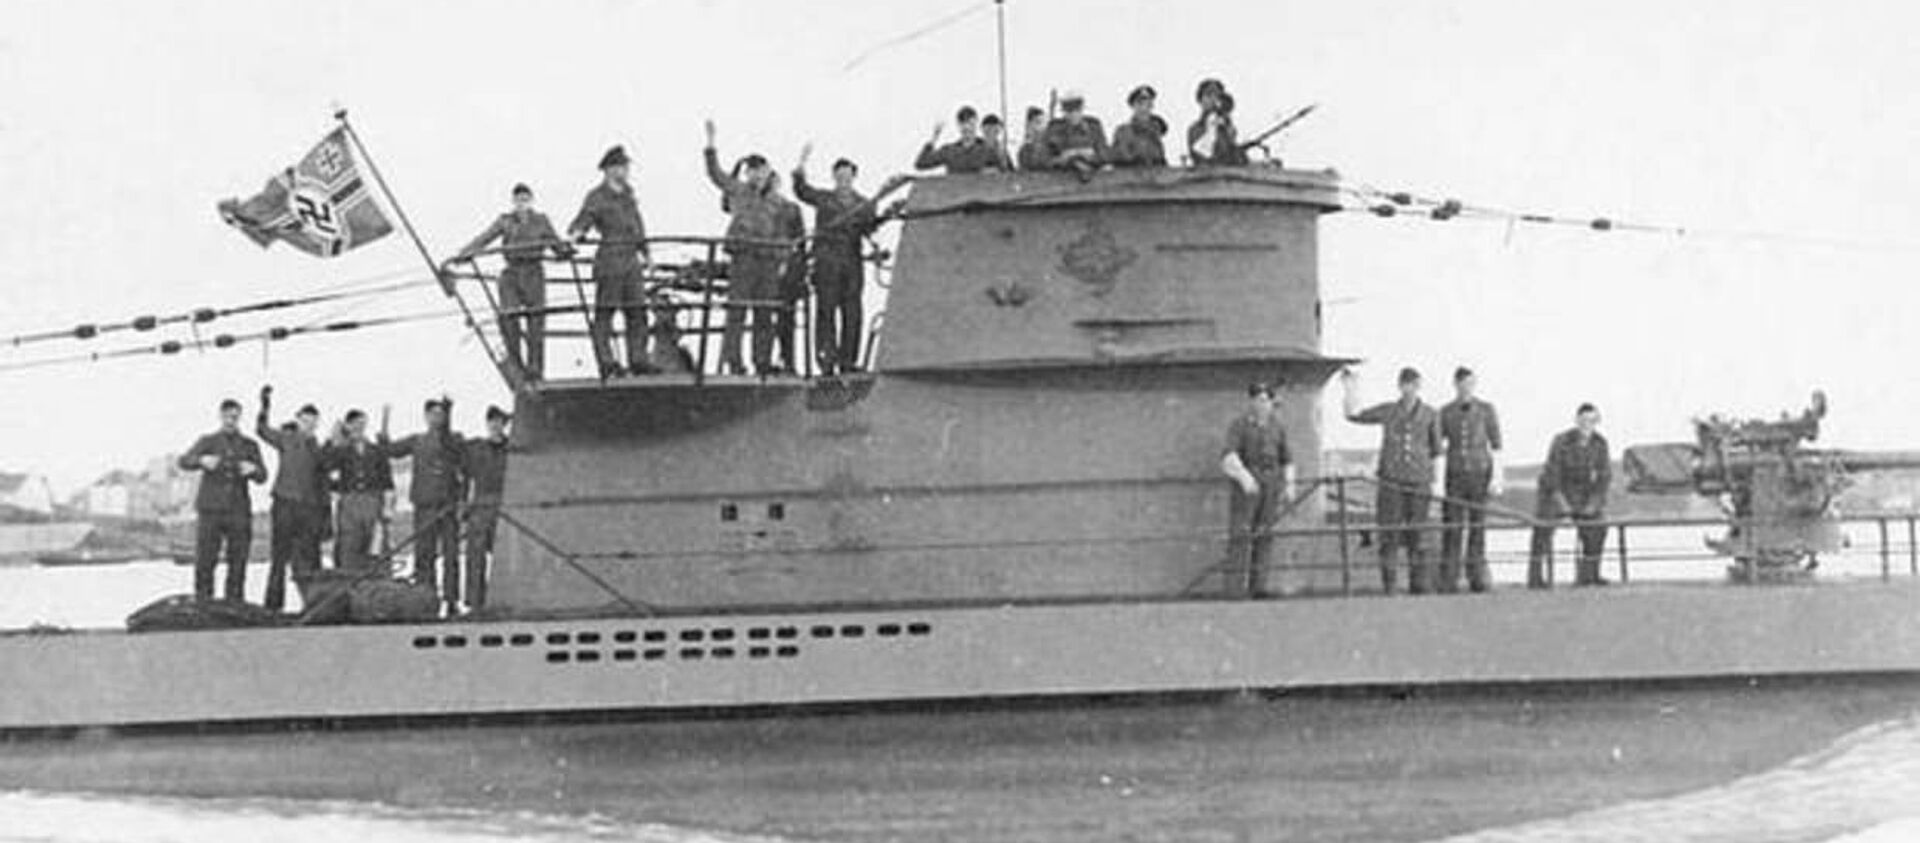 Submarino nazi U-2513 del Tipo XXI (archivo) - Sputnik Mundo, 1920, 05.11.2018